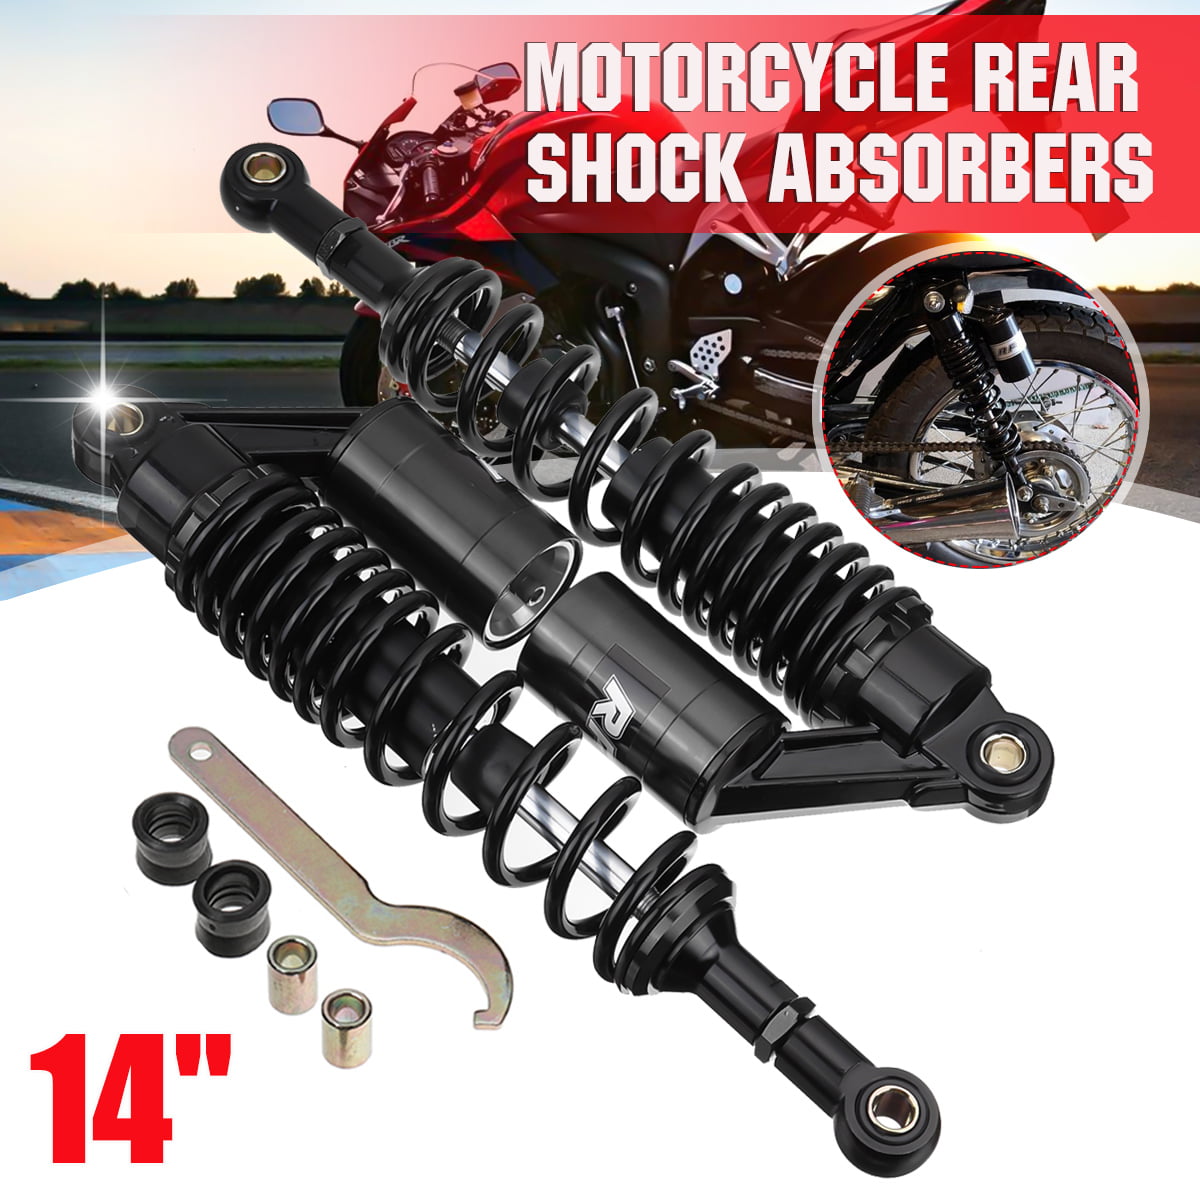 360mm 14.17" Air Shock Absorber Motorcycle Suspension fit Honda Suzuki Dirt Bike 